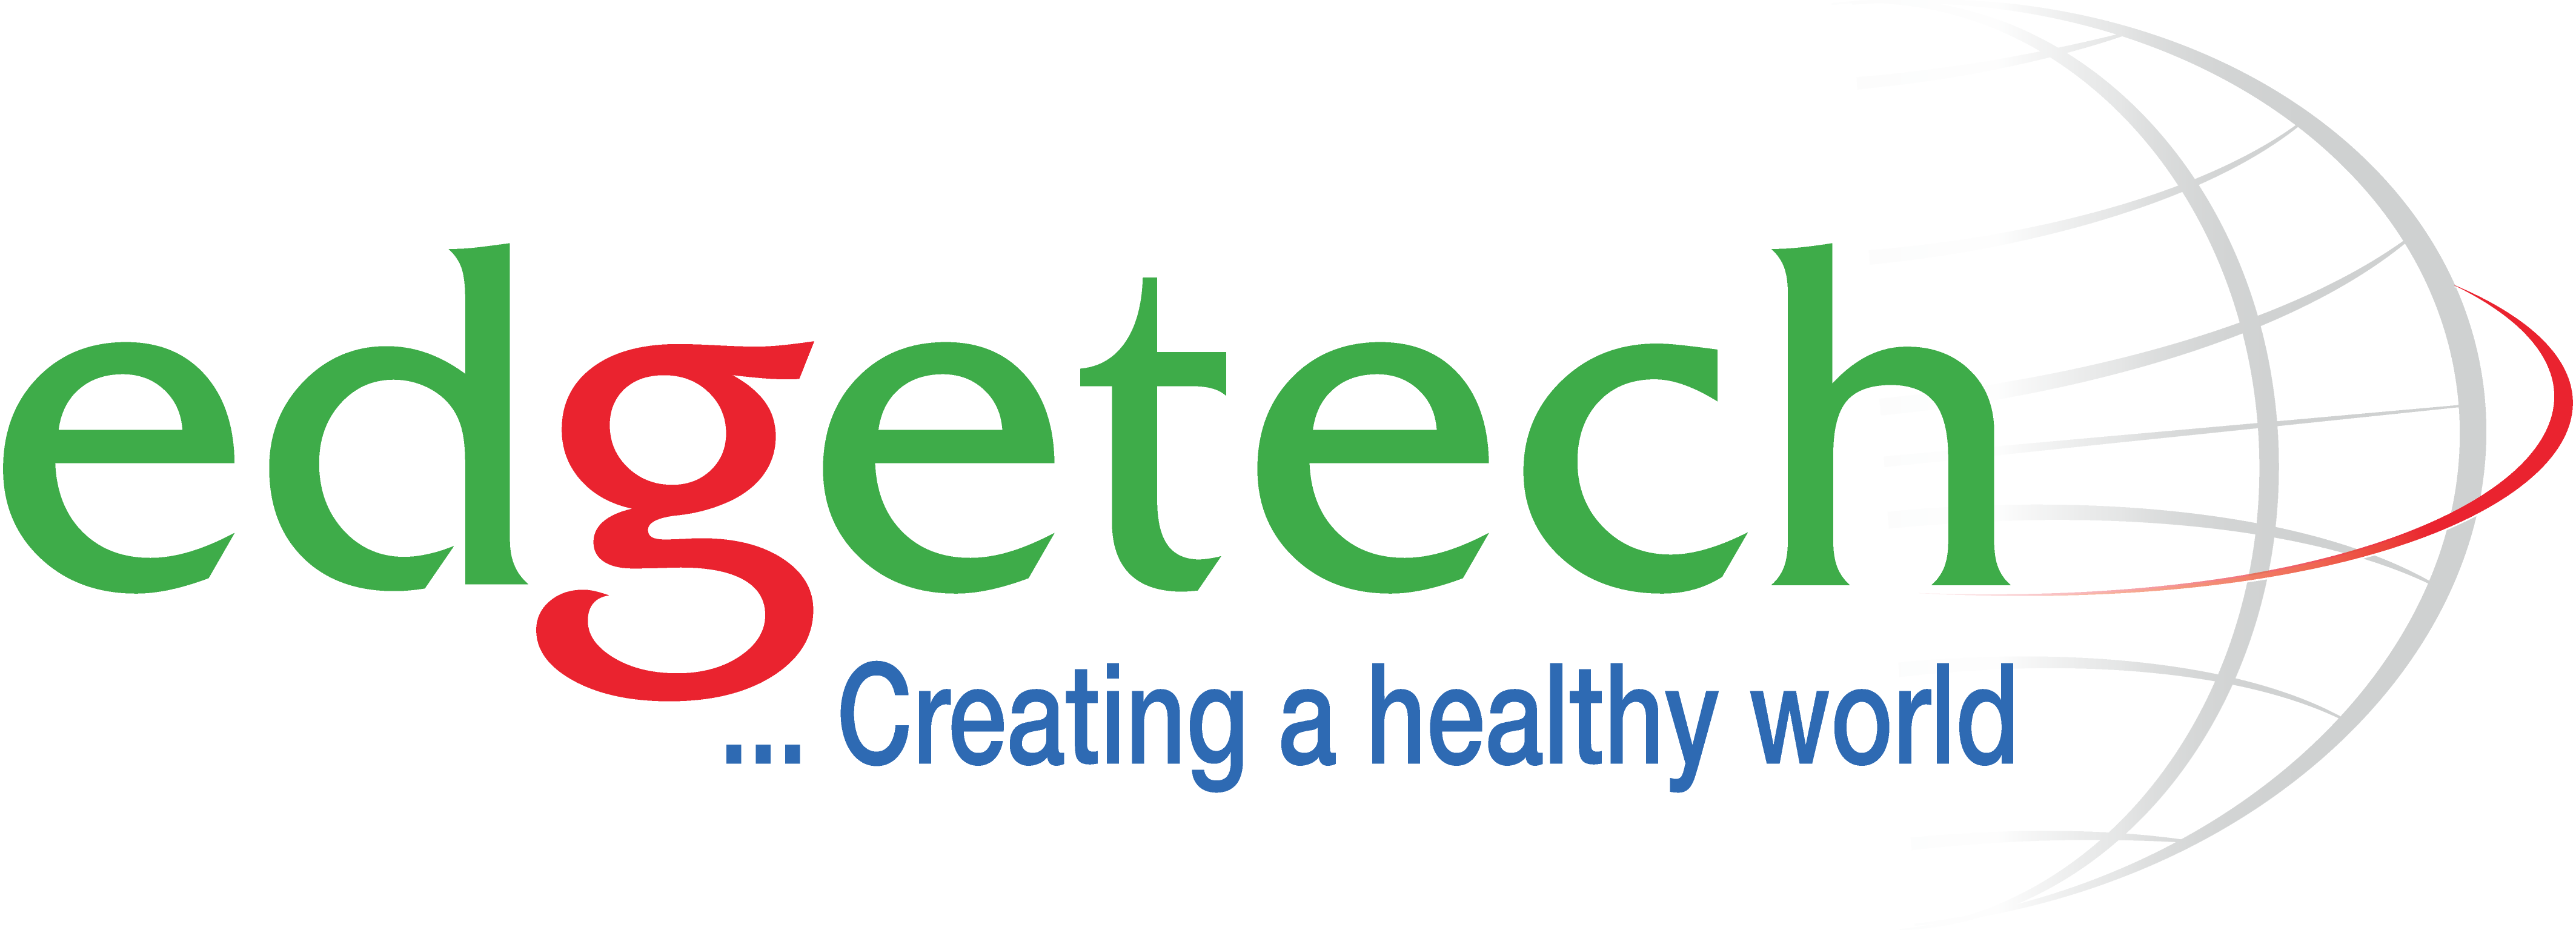 edgetech logo 